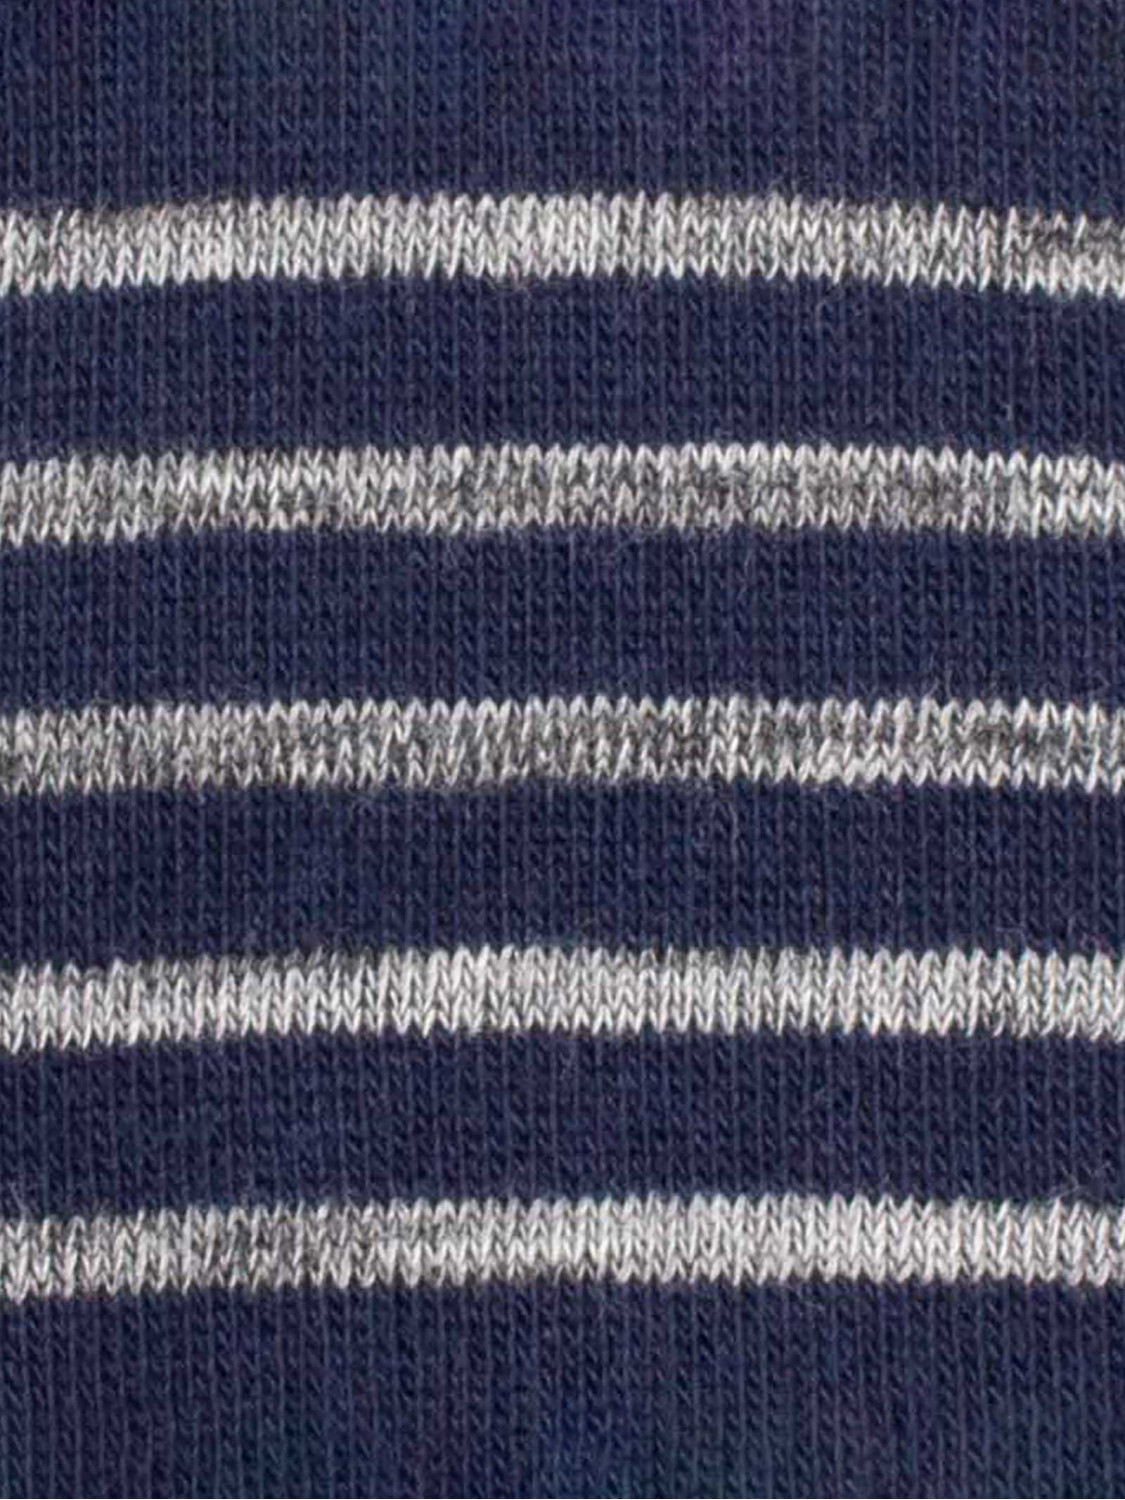 Mélange stripes pattern Men's Crew Socks